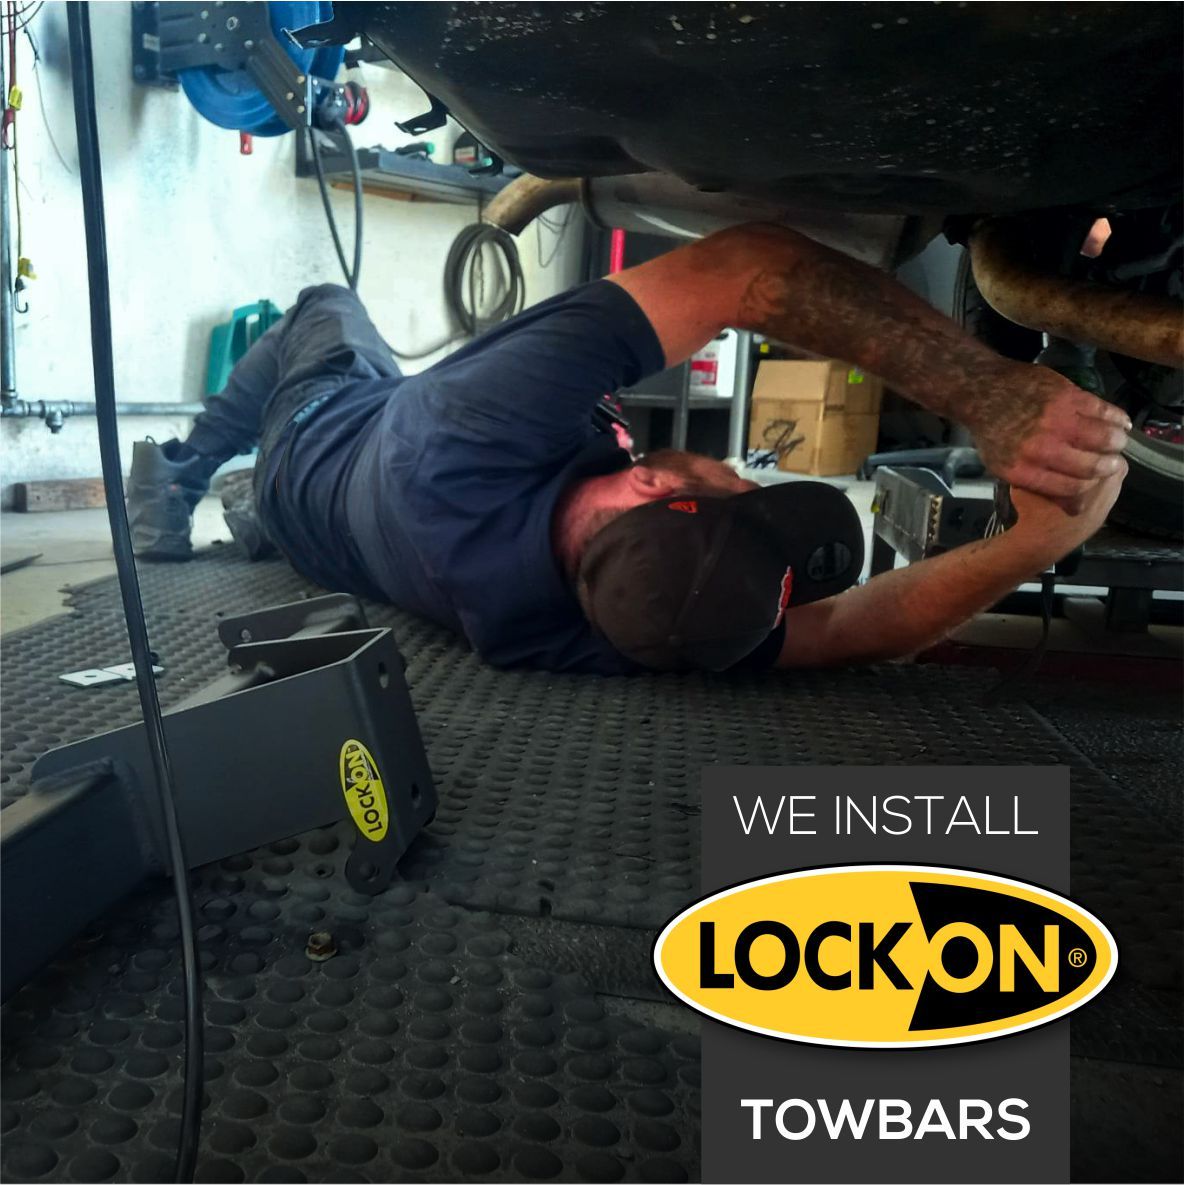 Installing a LOCKON towbar